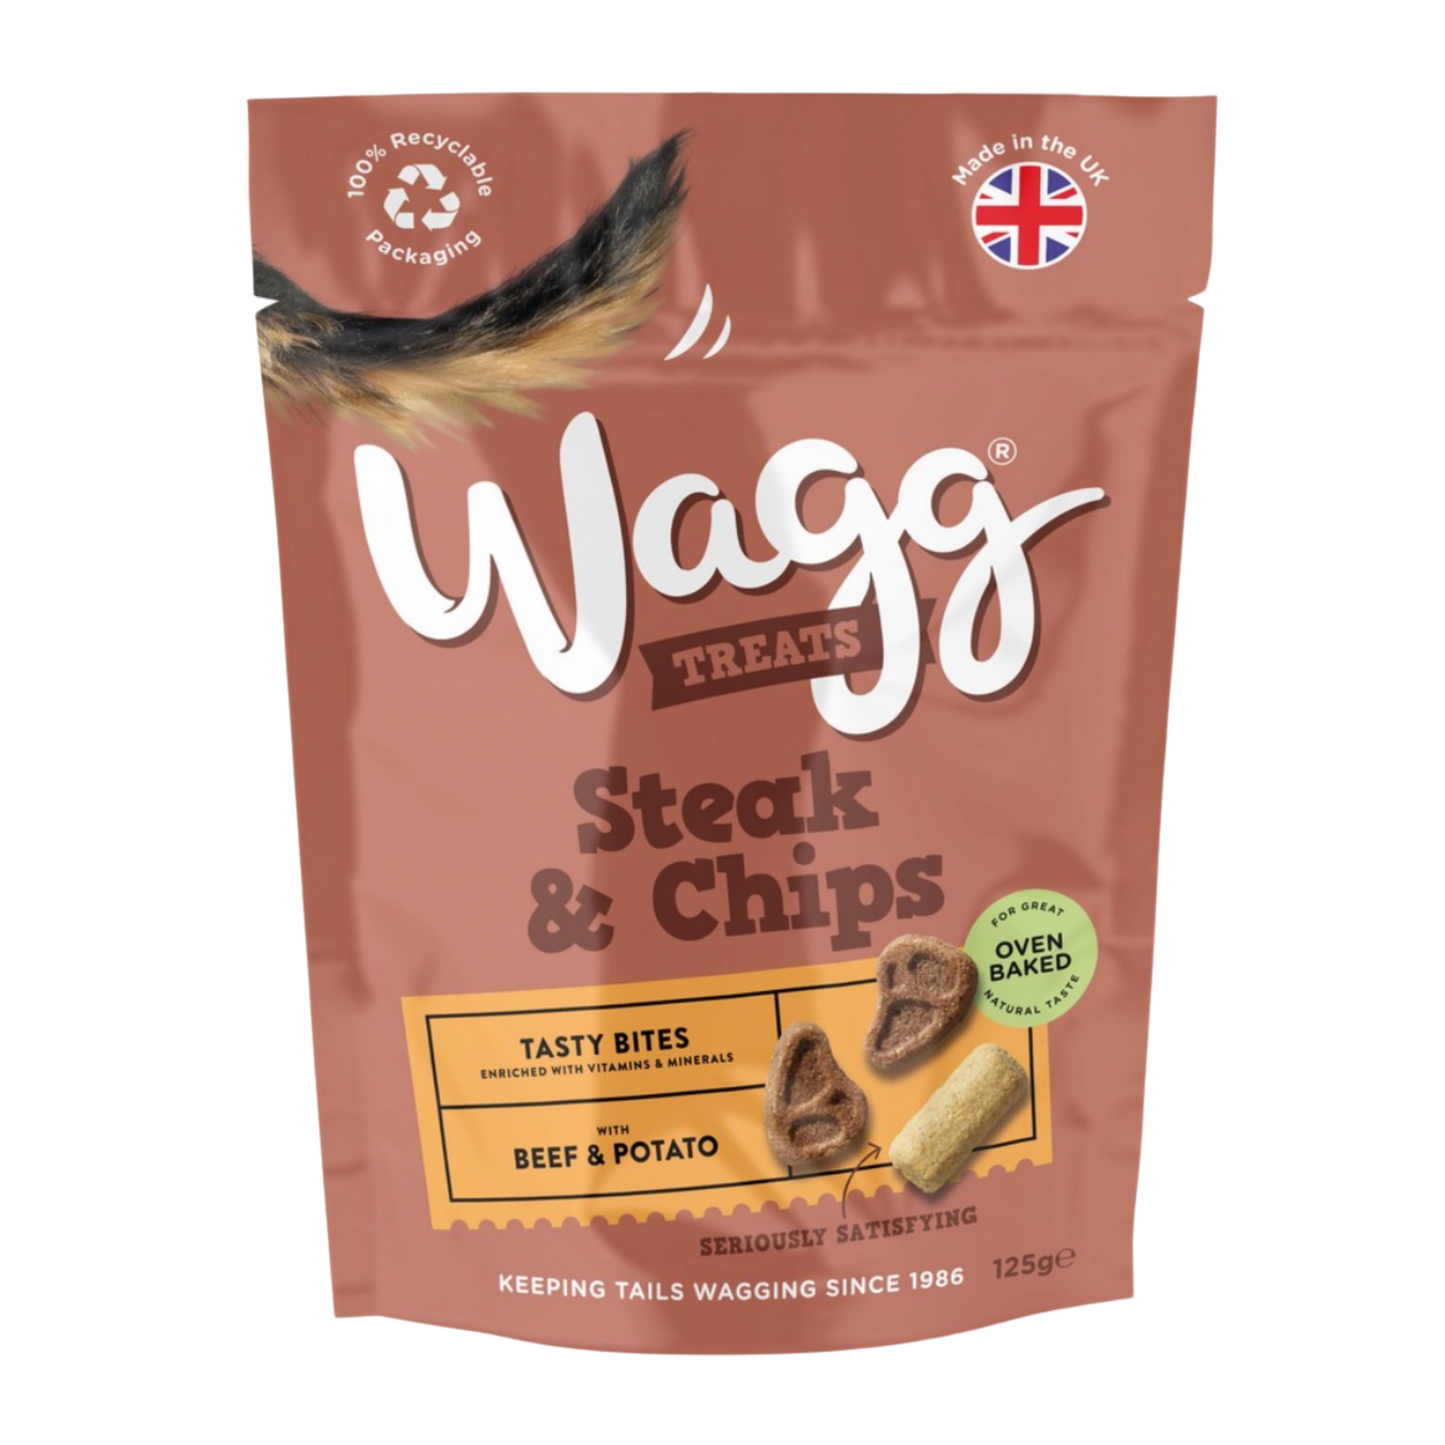 Wagg Steak & Chips Dog Treats With Beef & Potato Tasty Bites 125g